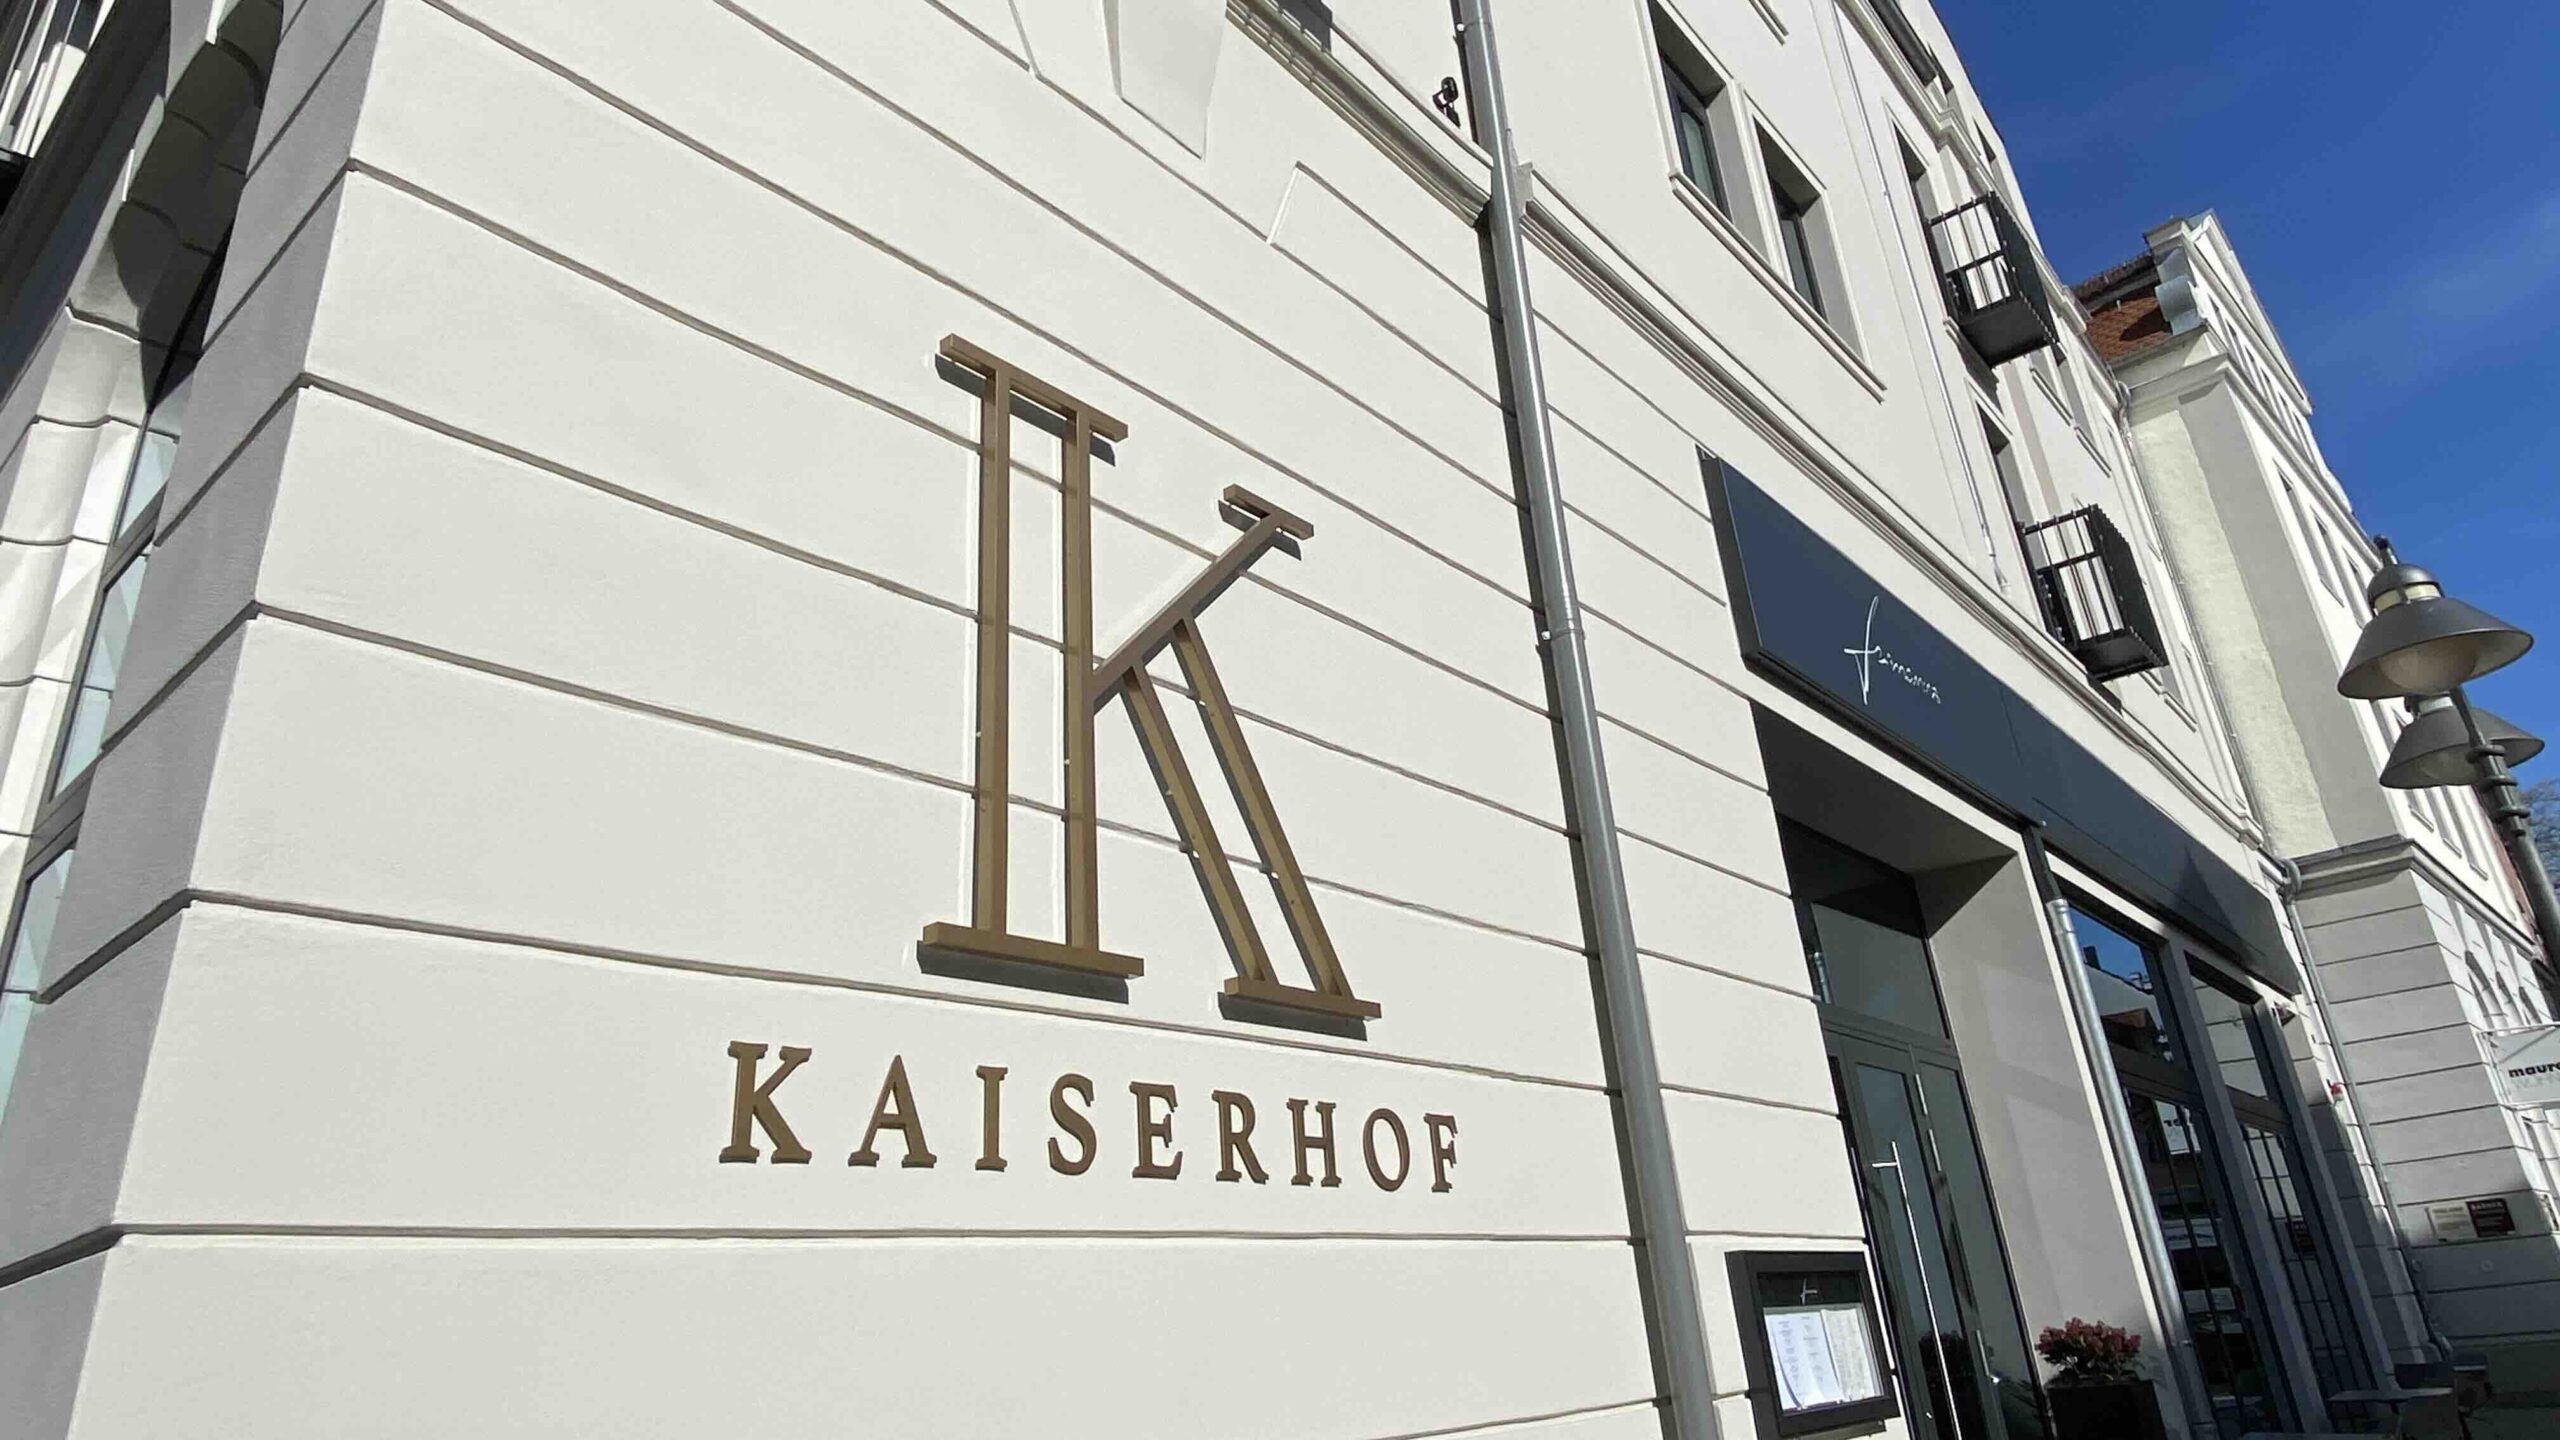 Hotel Kaiserhof Exterior Ravensburg